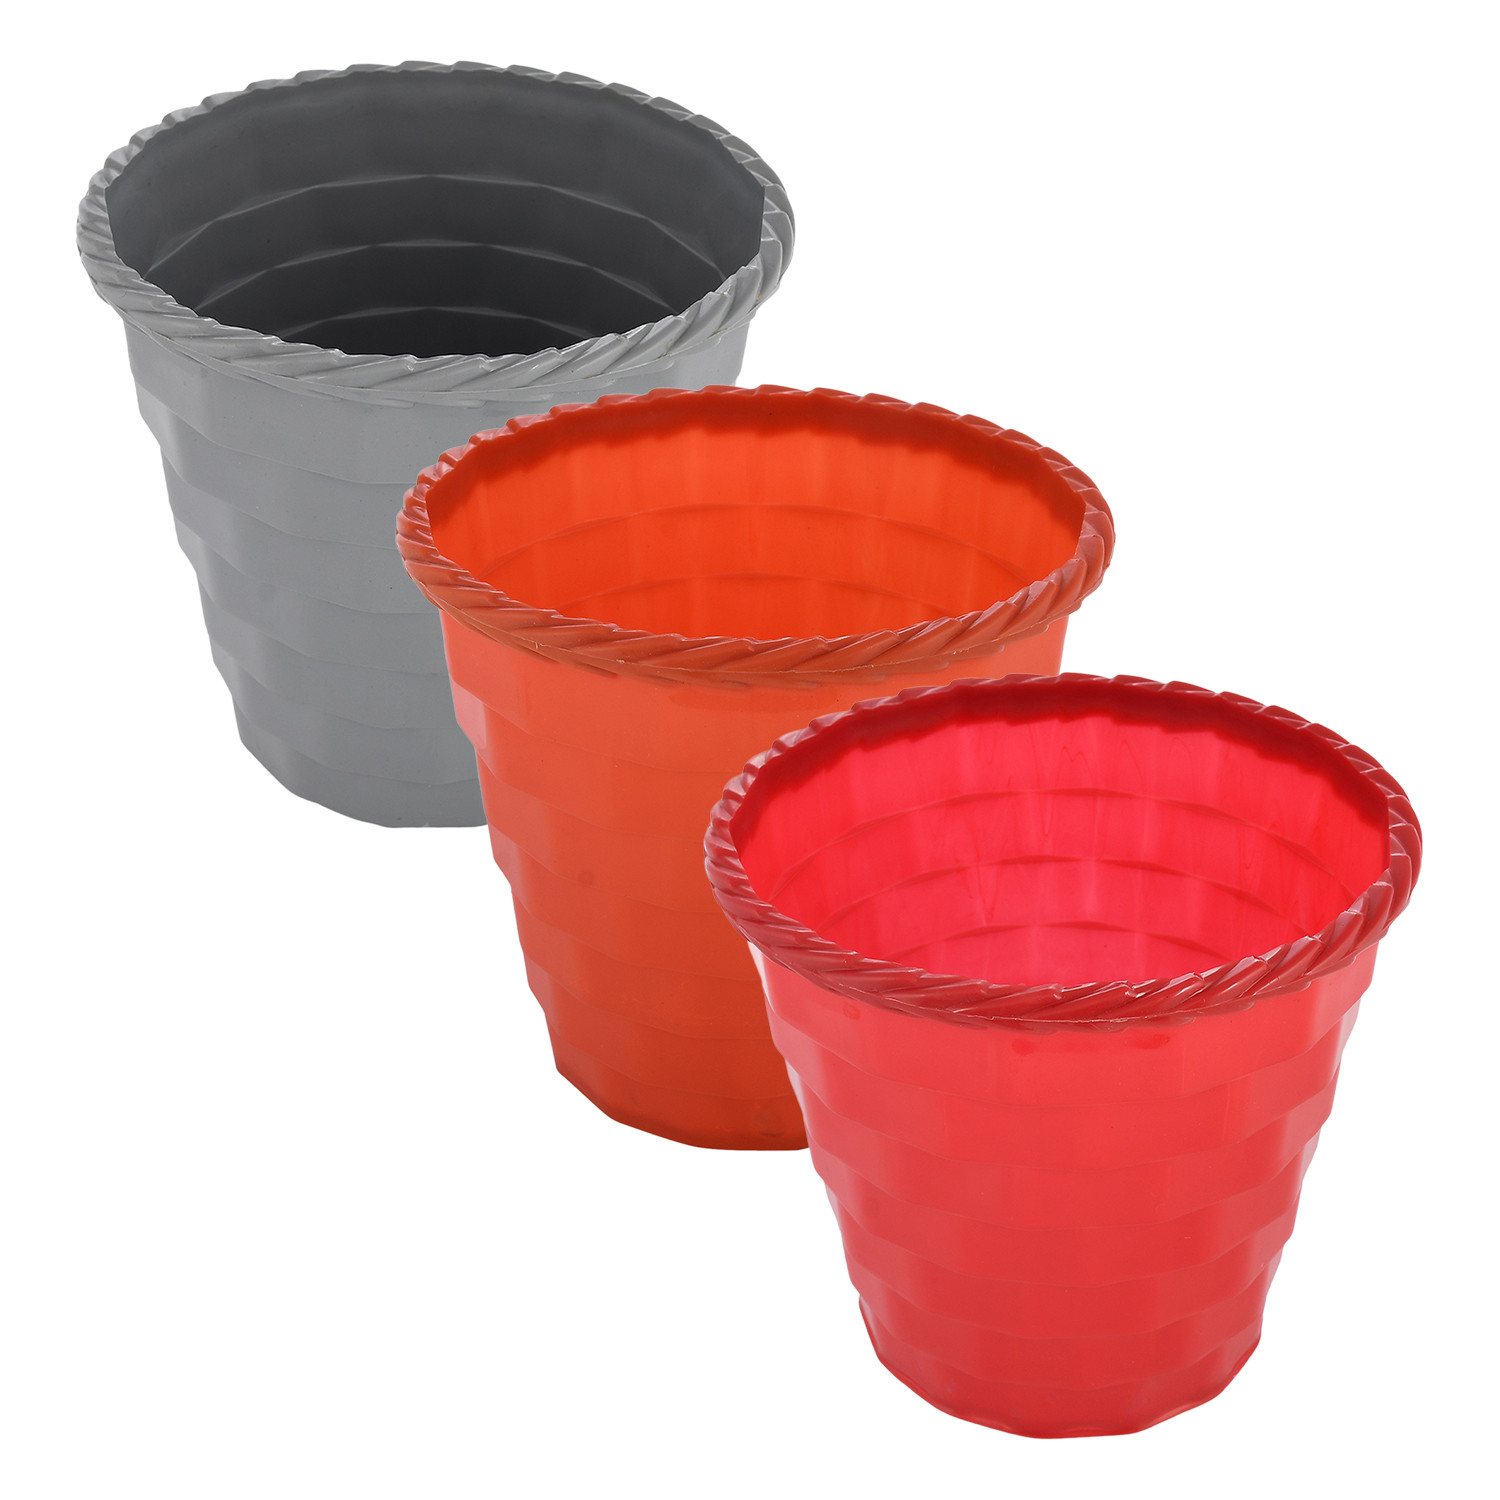 Kuber Industries Brick Flower Pot|Durable Plastic Flower Pots|Planters for Home Décor|Garden|Living Room|Balcony|6 Inch|Pack of 3 (Multicolor)